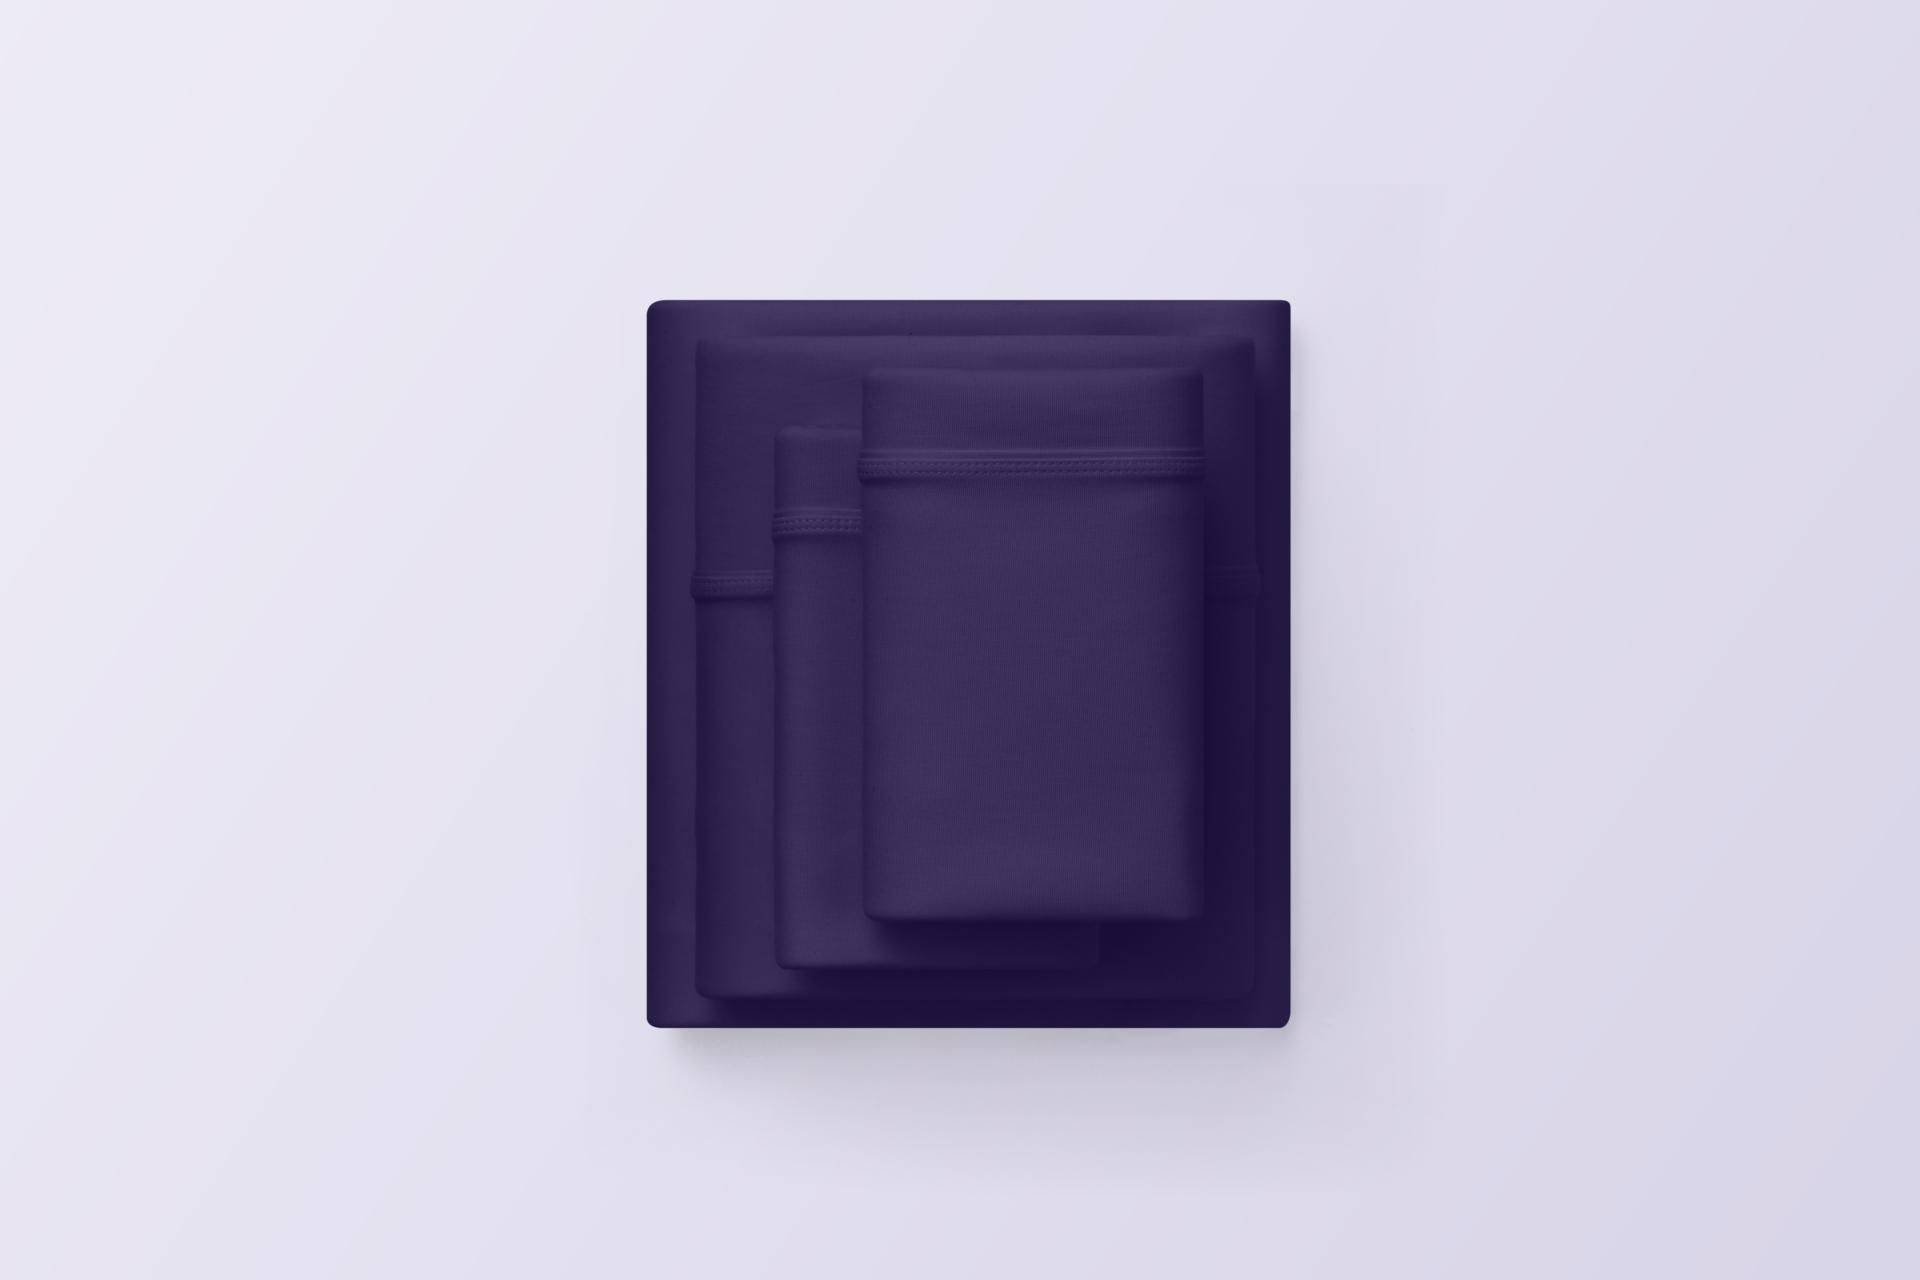 Purple SoftStretch Purple Queen Sheet Set